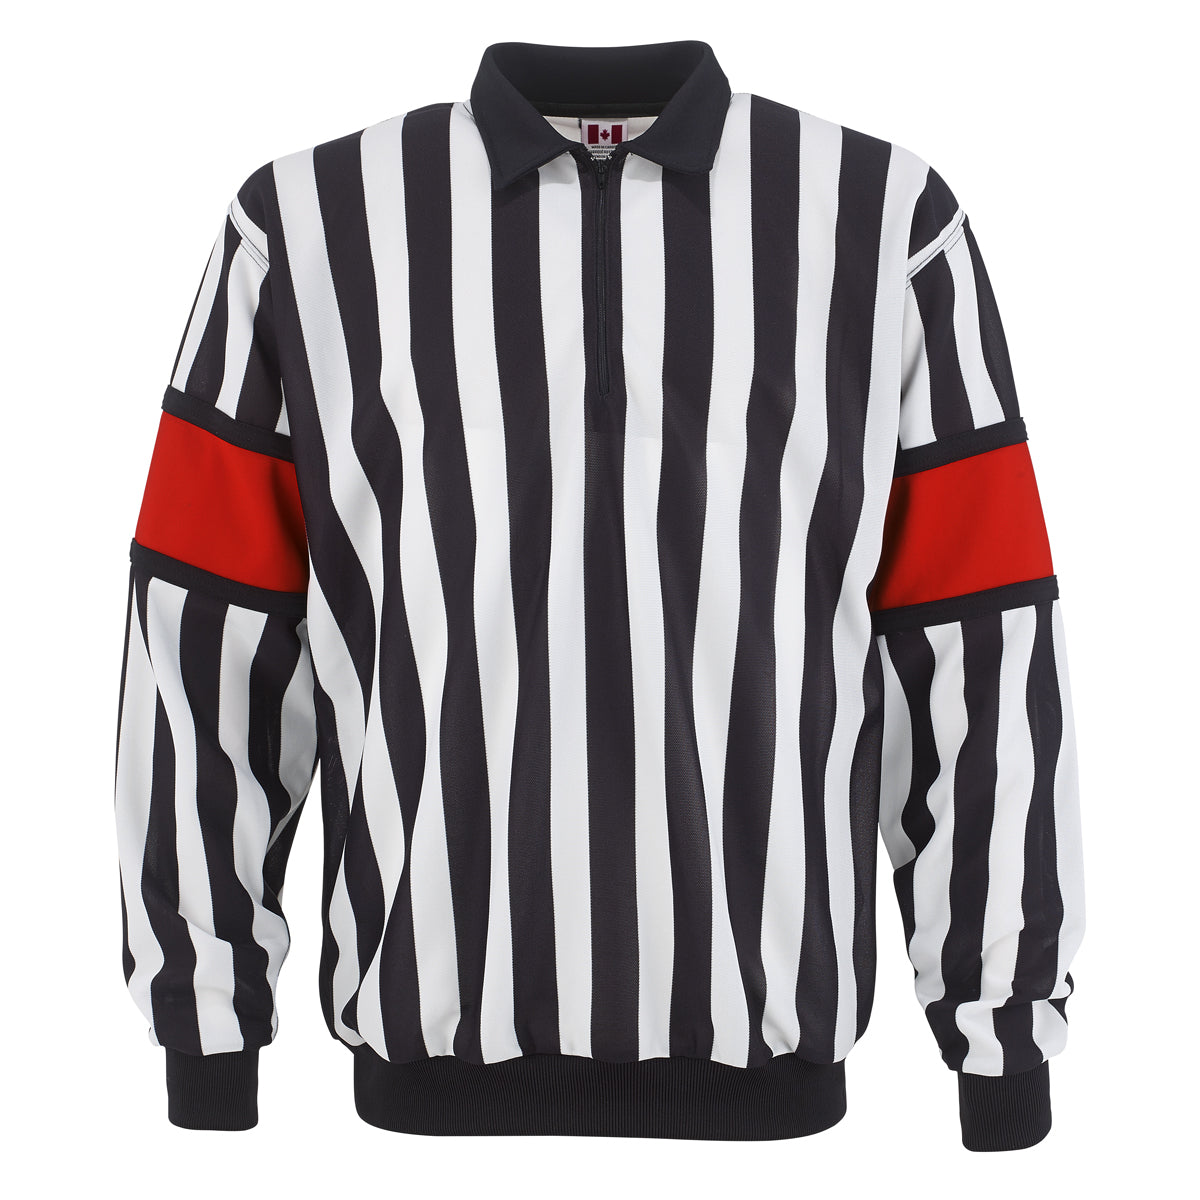 CCM Pro 150 Referee Jersey w/ Sewn On Red Armbands